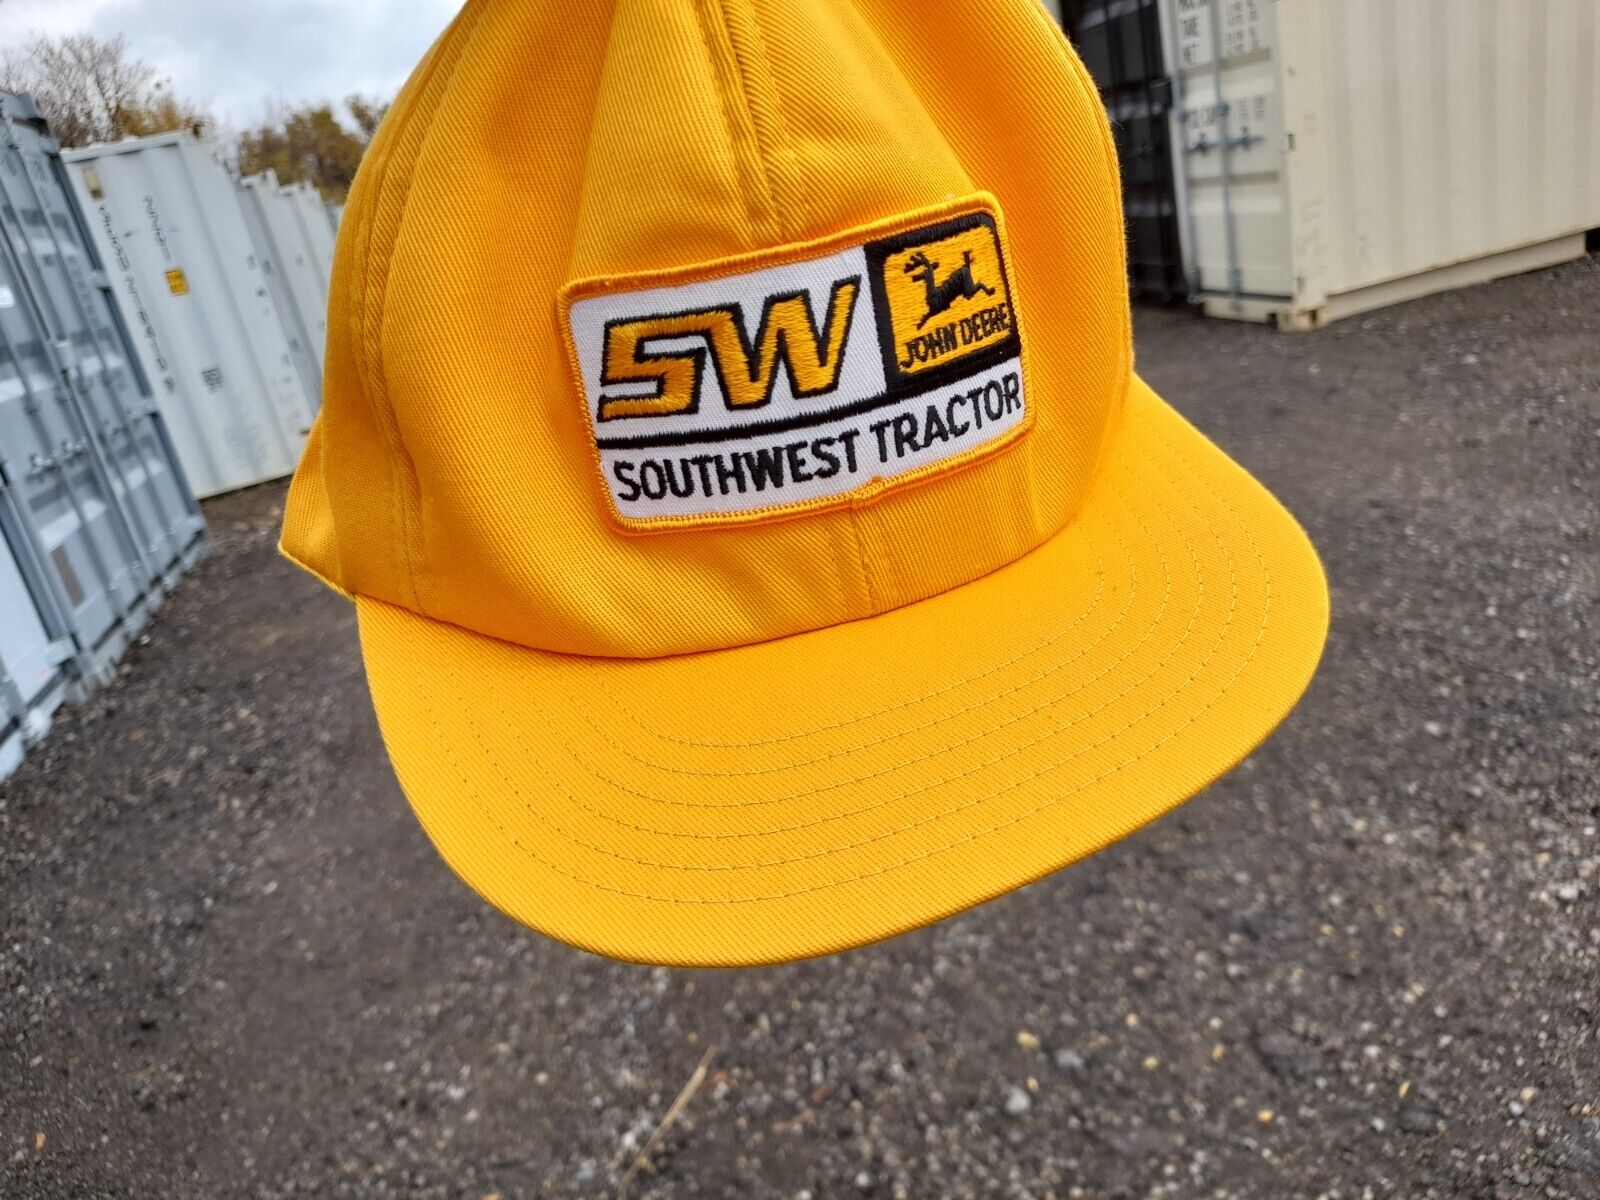 Vintage John Deere Trucker Hat Retro Southwest Tractor Yellow Snapback Cap 1980s